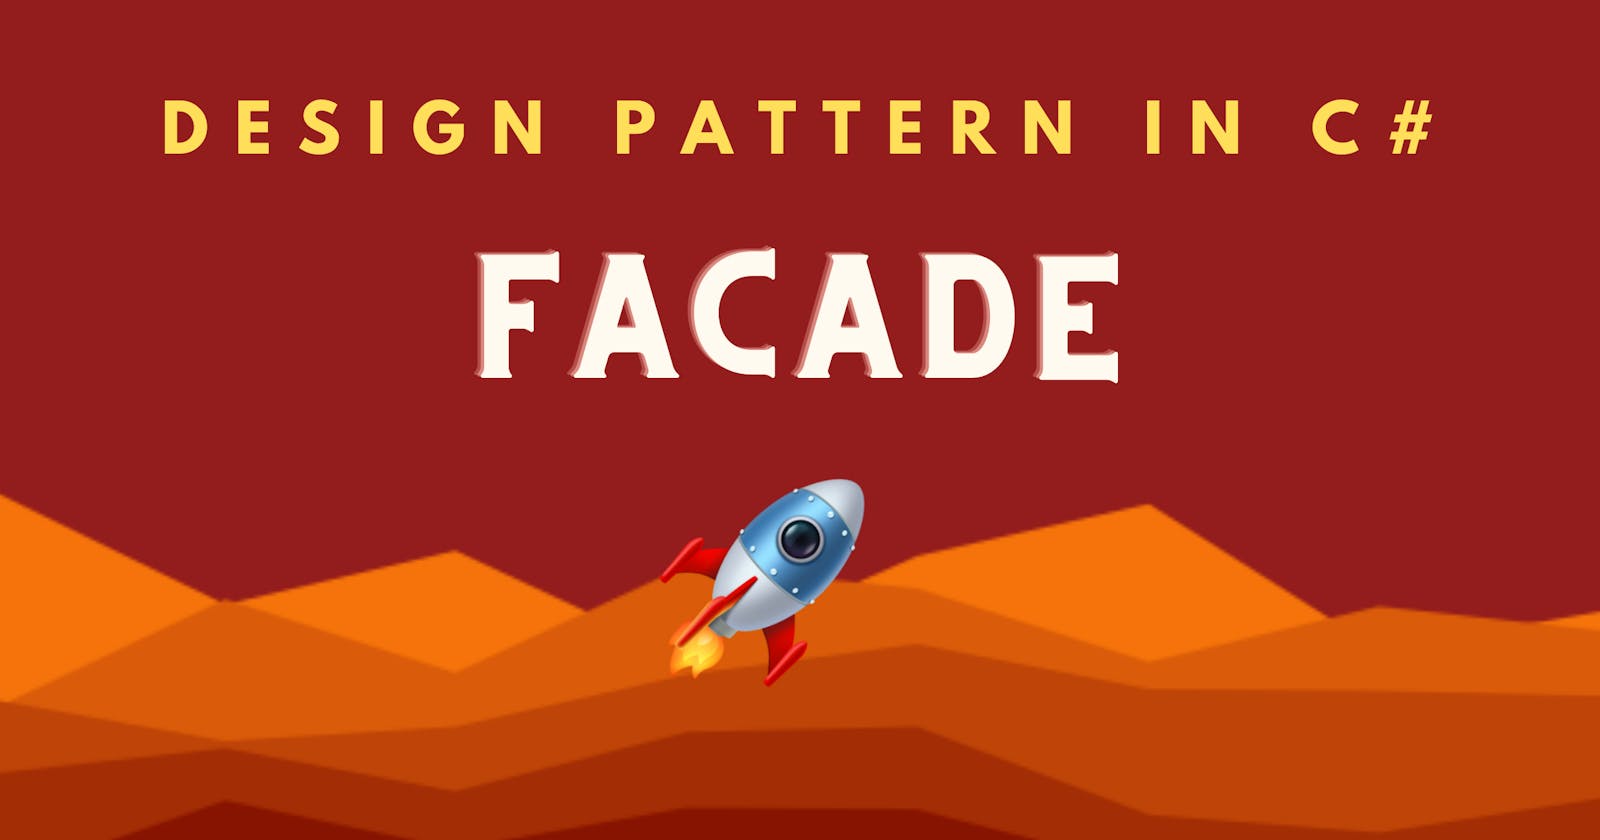 Design Pattern in C# - Facade